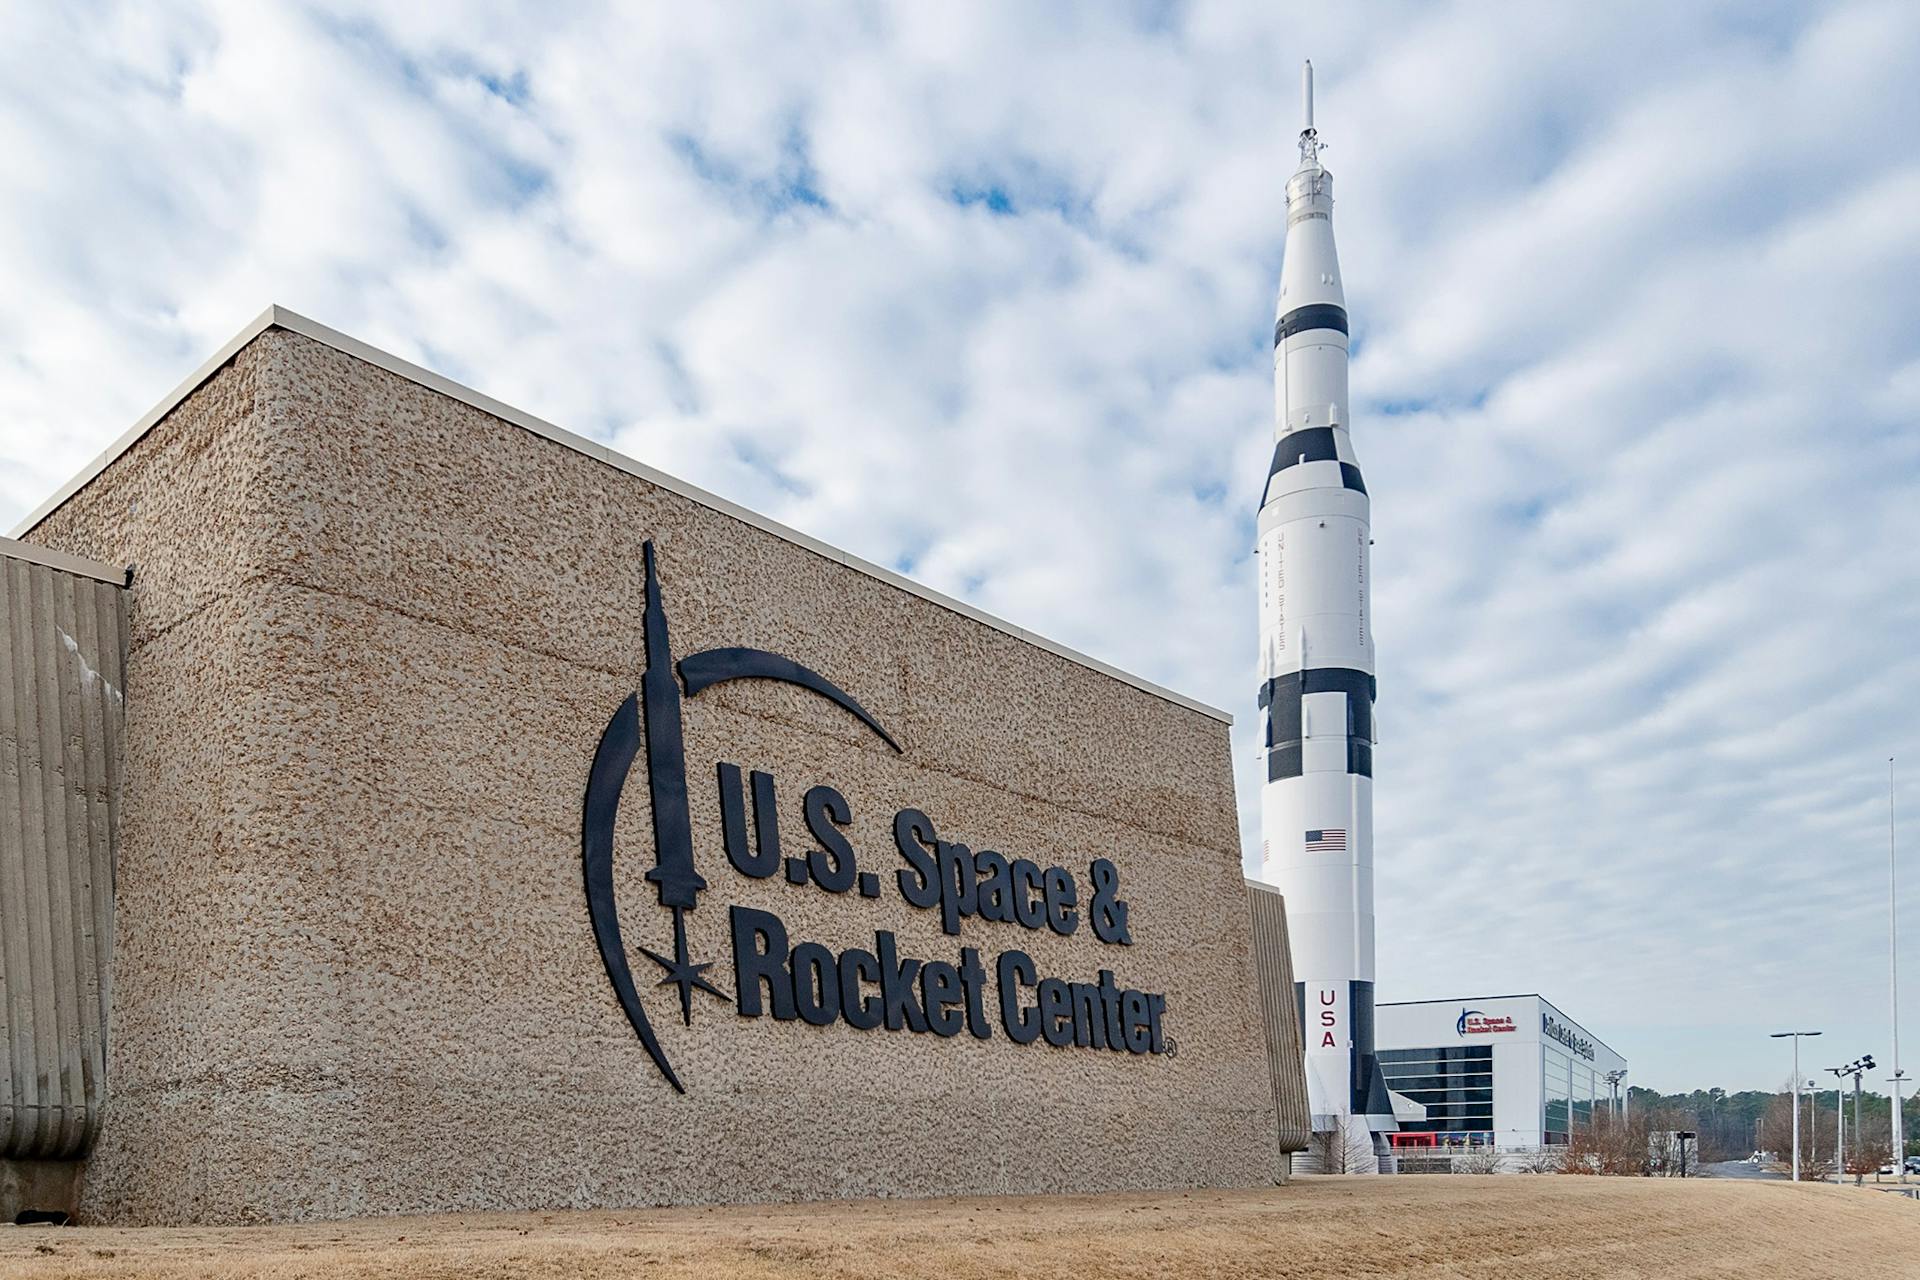 United State Space & Rocket Center in Huntsville, AL